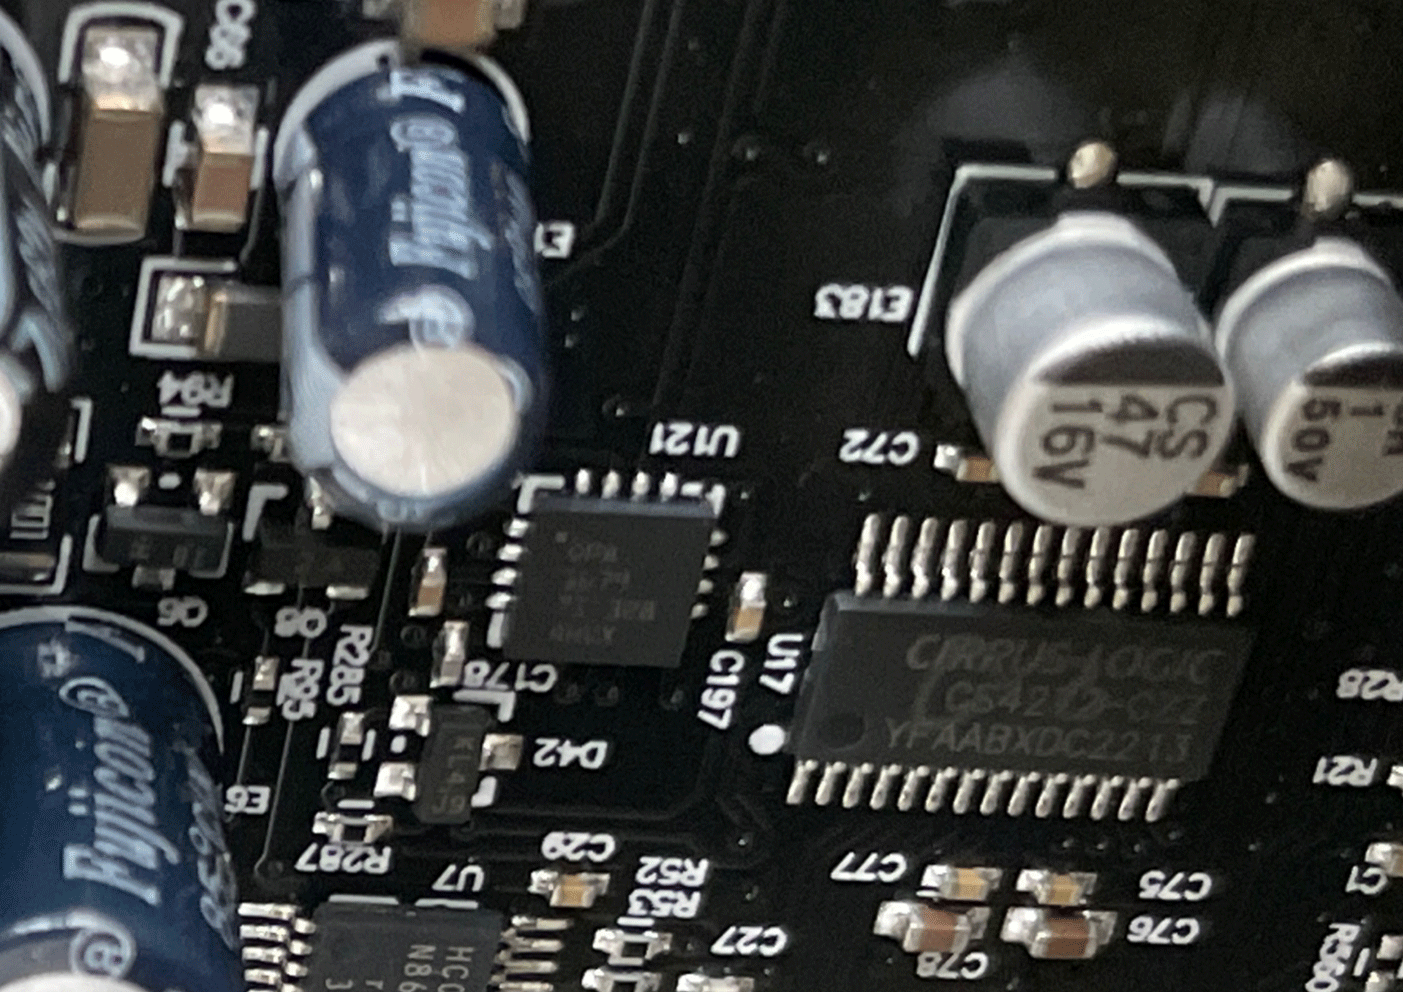 Cirrus Logic Digital analogue convertors